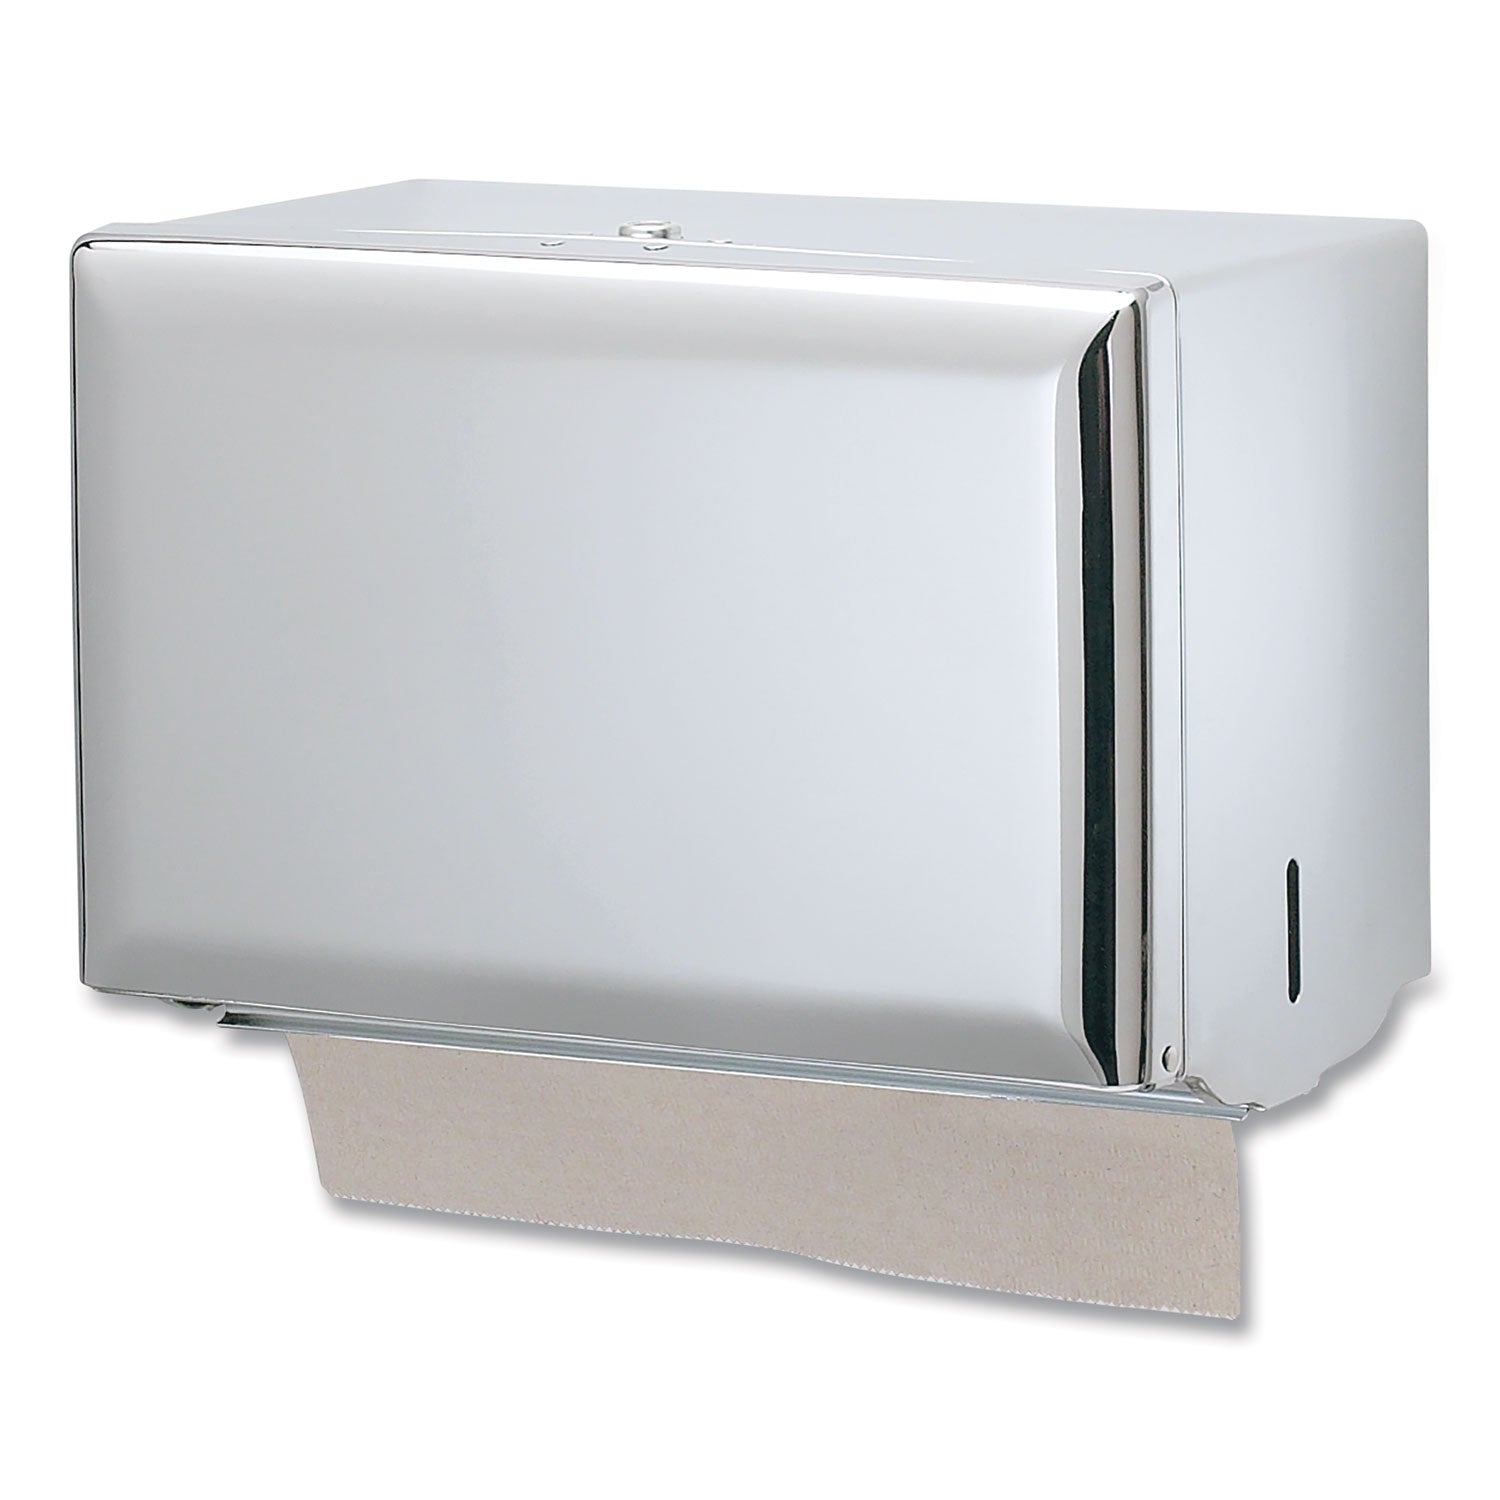 Singlefold Paper Towel Dispenser, 10.75 x 6 x 7.5, Chrome - 